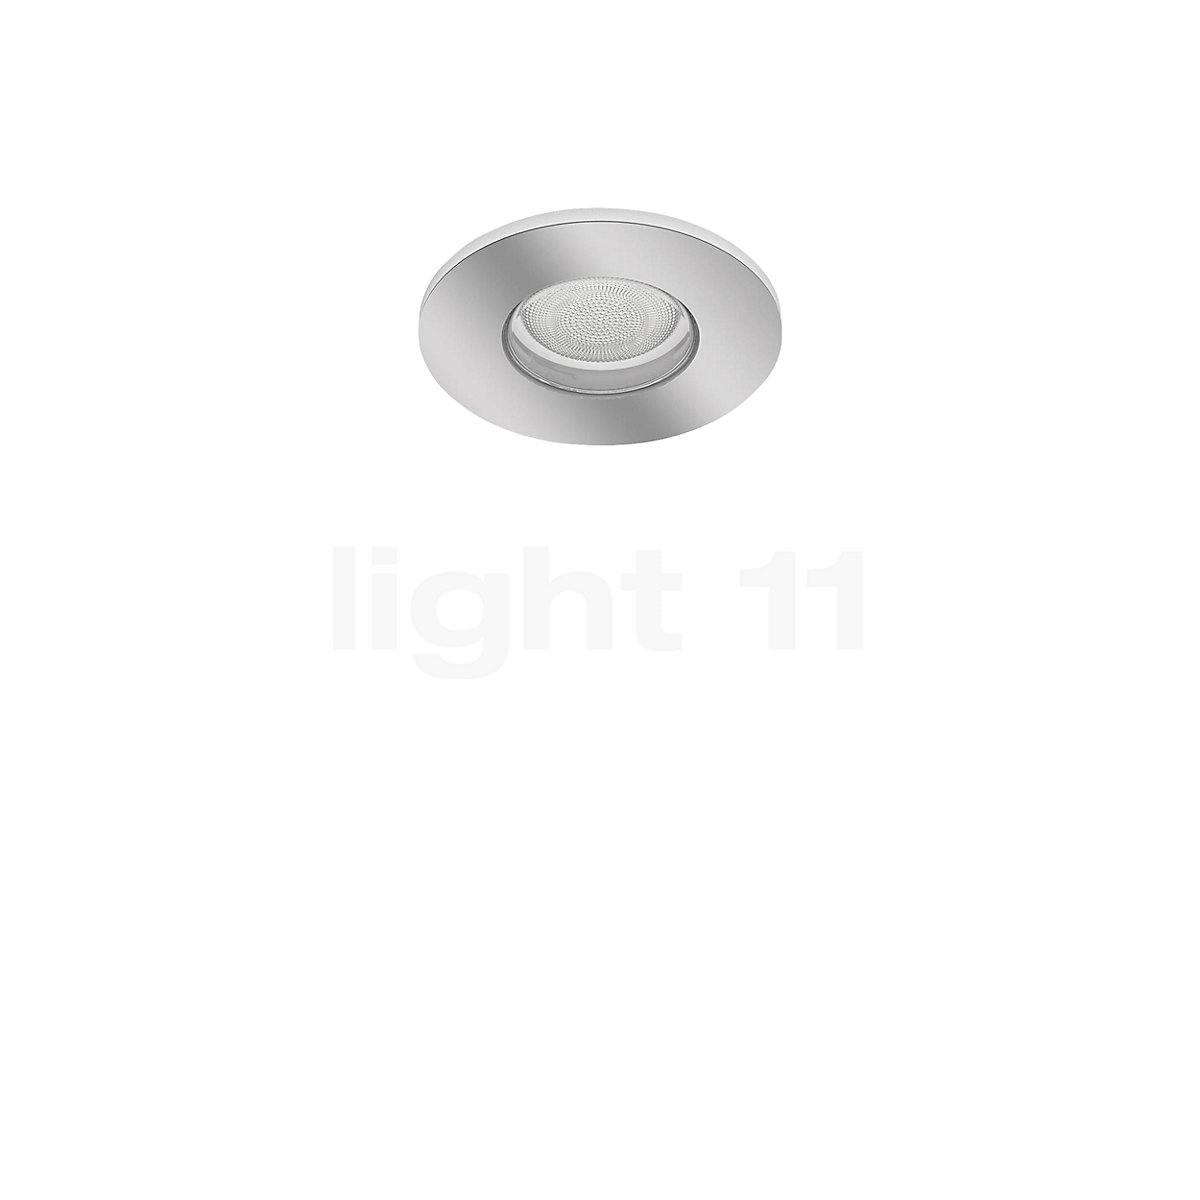 Plafonnier LED intelligent Xamento L Philips Hue blanc